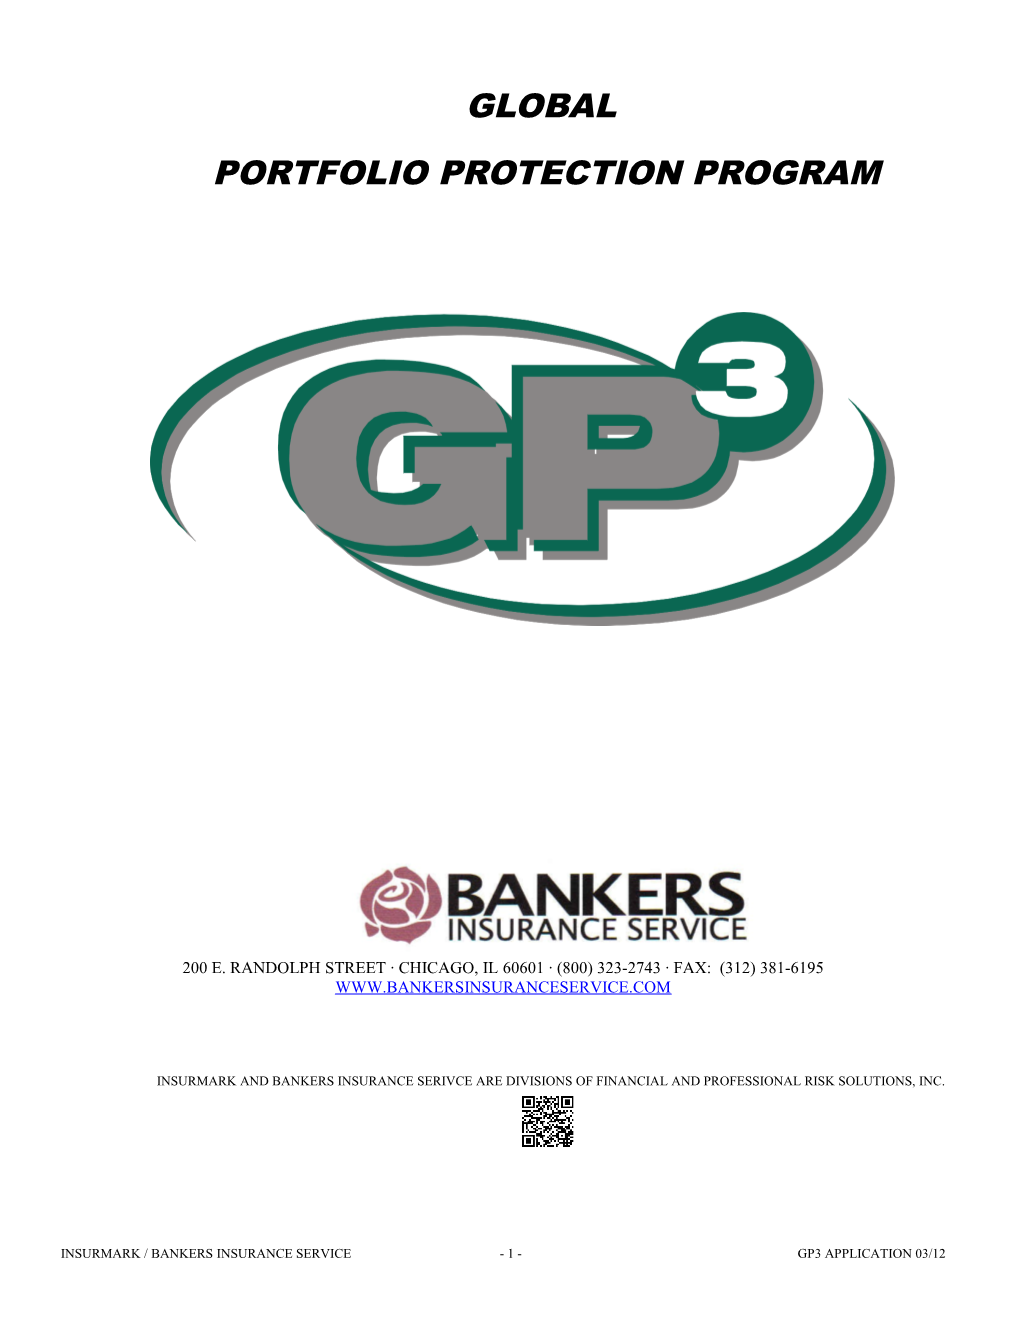 Global Portfolio Protection Program